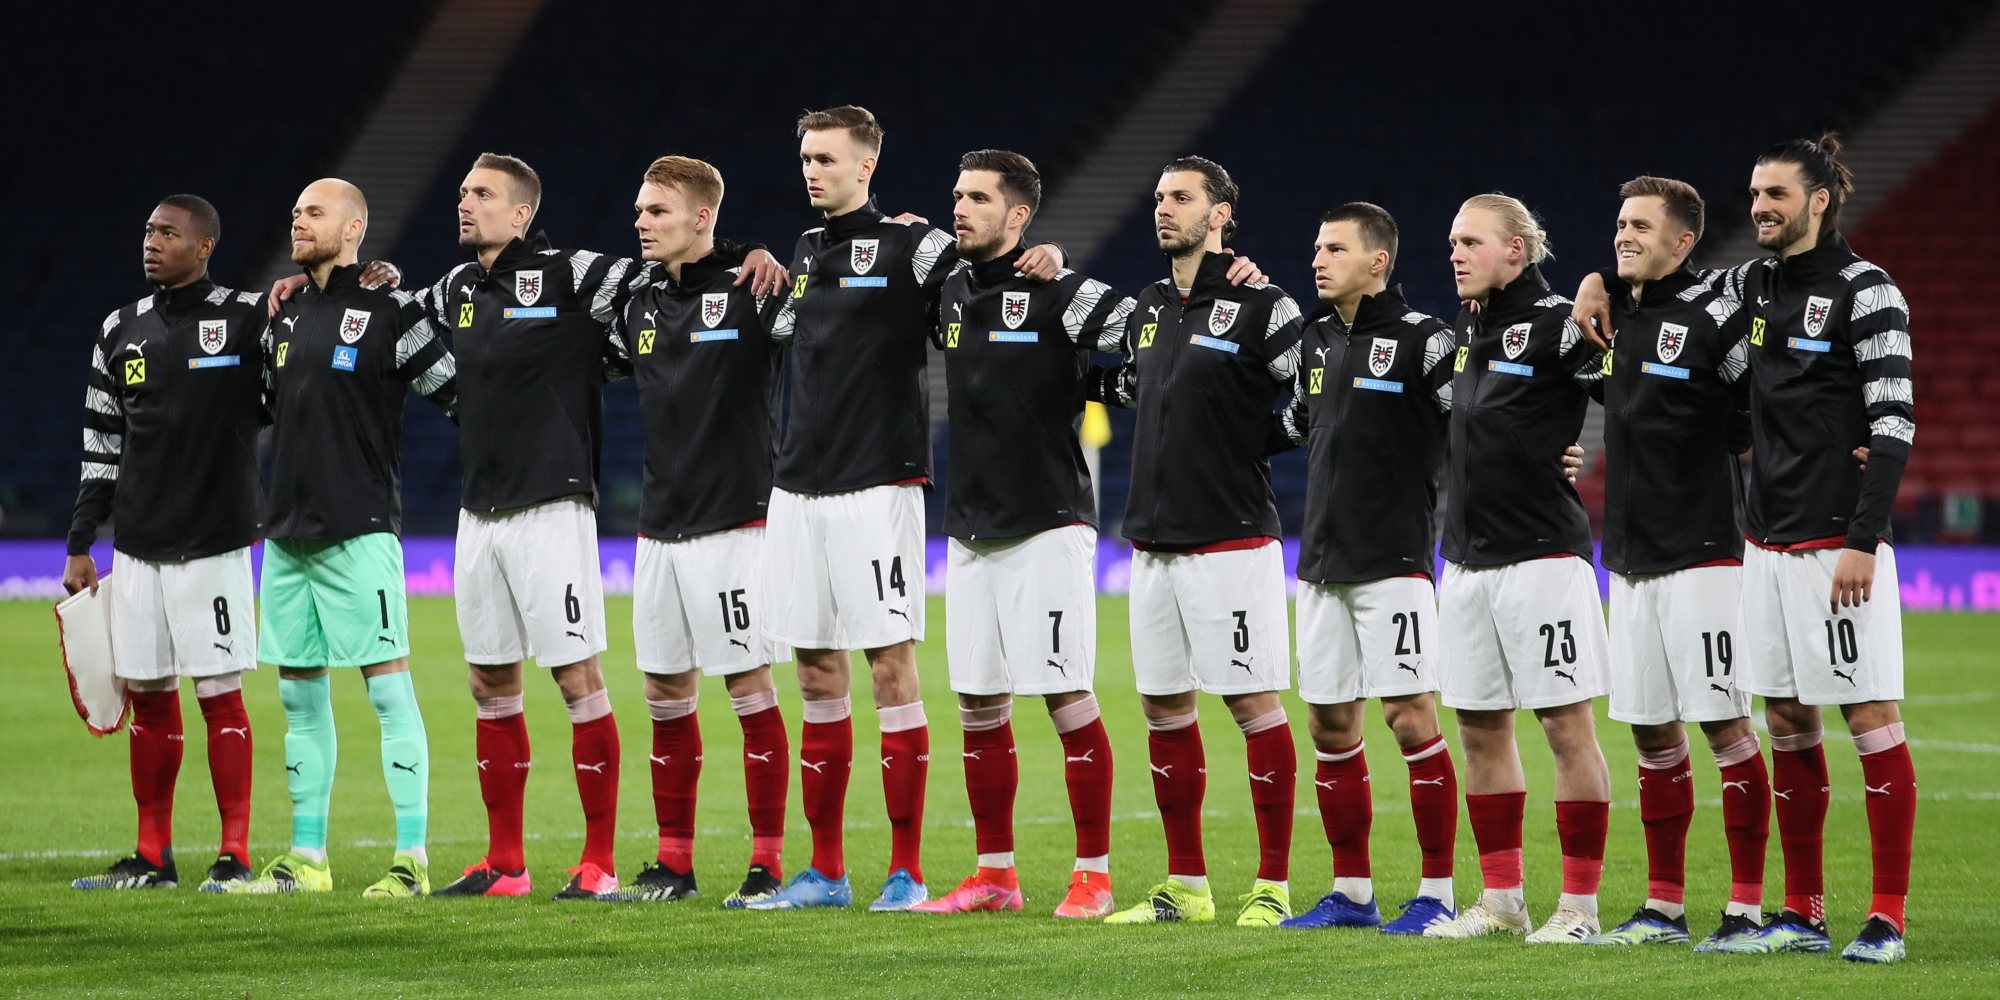 Áustria qualificou-se como segunda classificada do grupo G, com Polónia, Macedónia do Norte, Eslovénia, Israel e Letónia